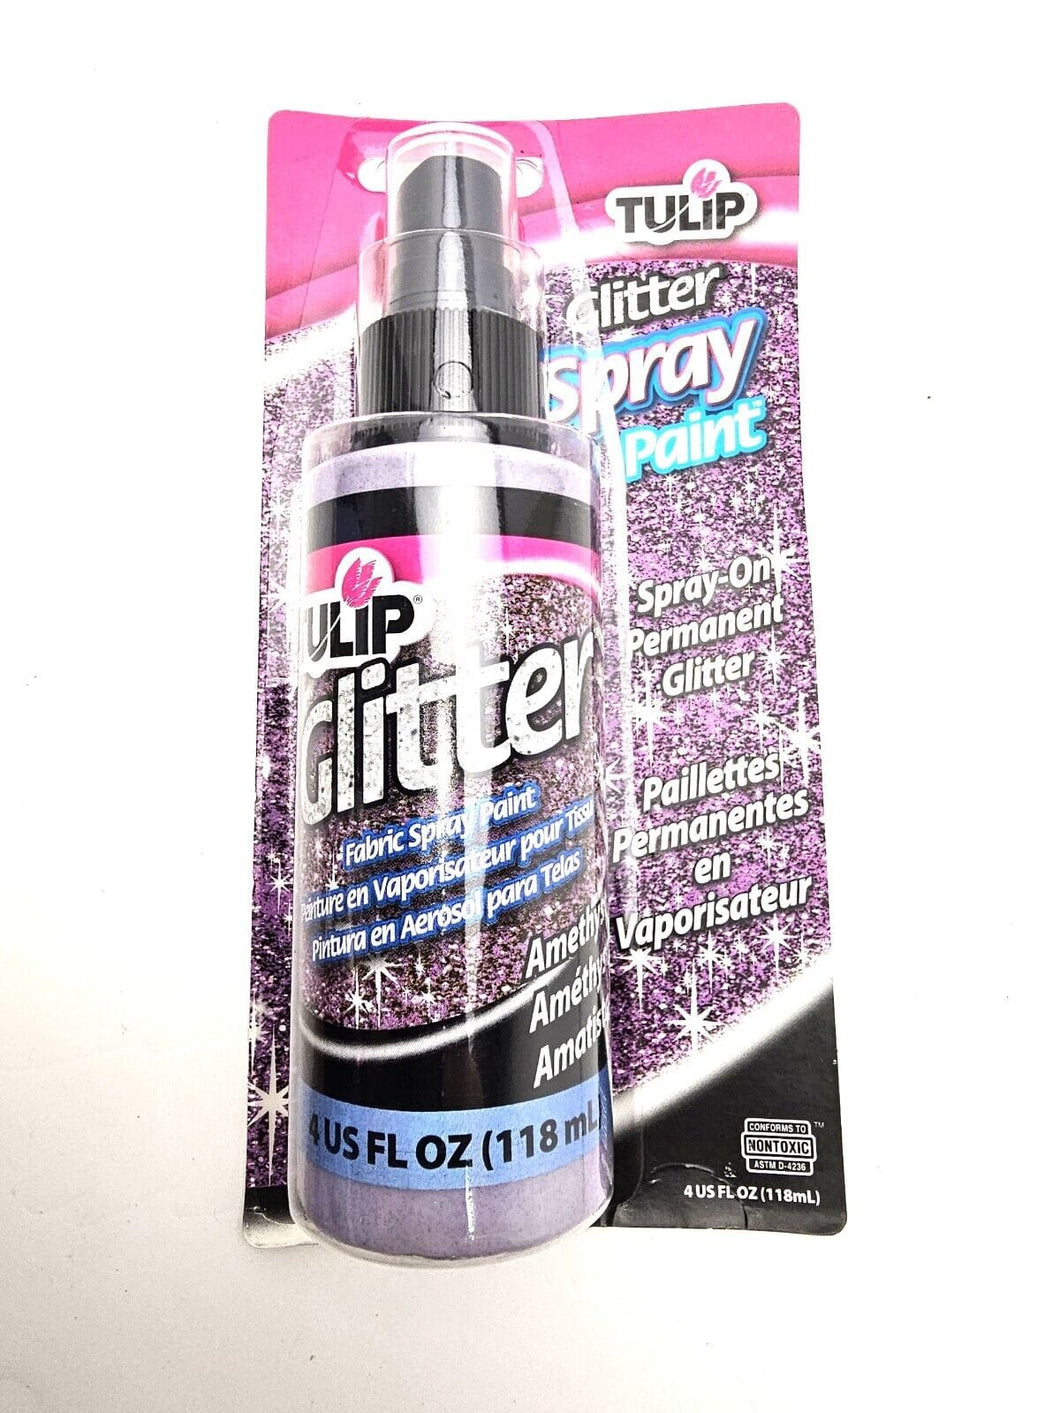 Tulip Amethyst Glitter Spray Paint 4 US FL OZ 118ml SA507 Harbourside Gifts